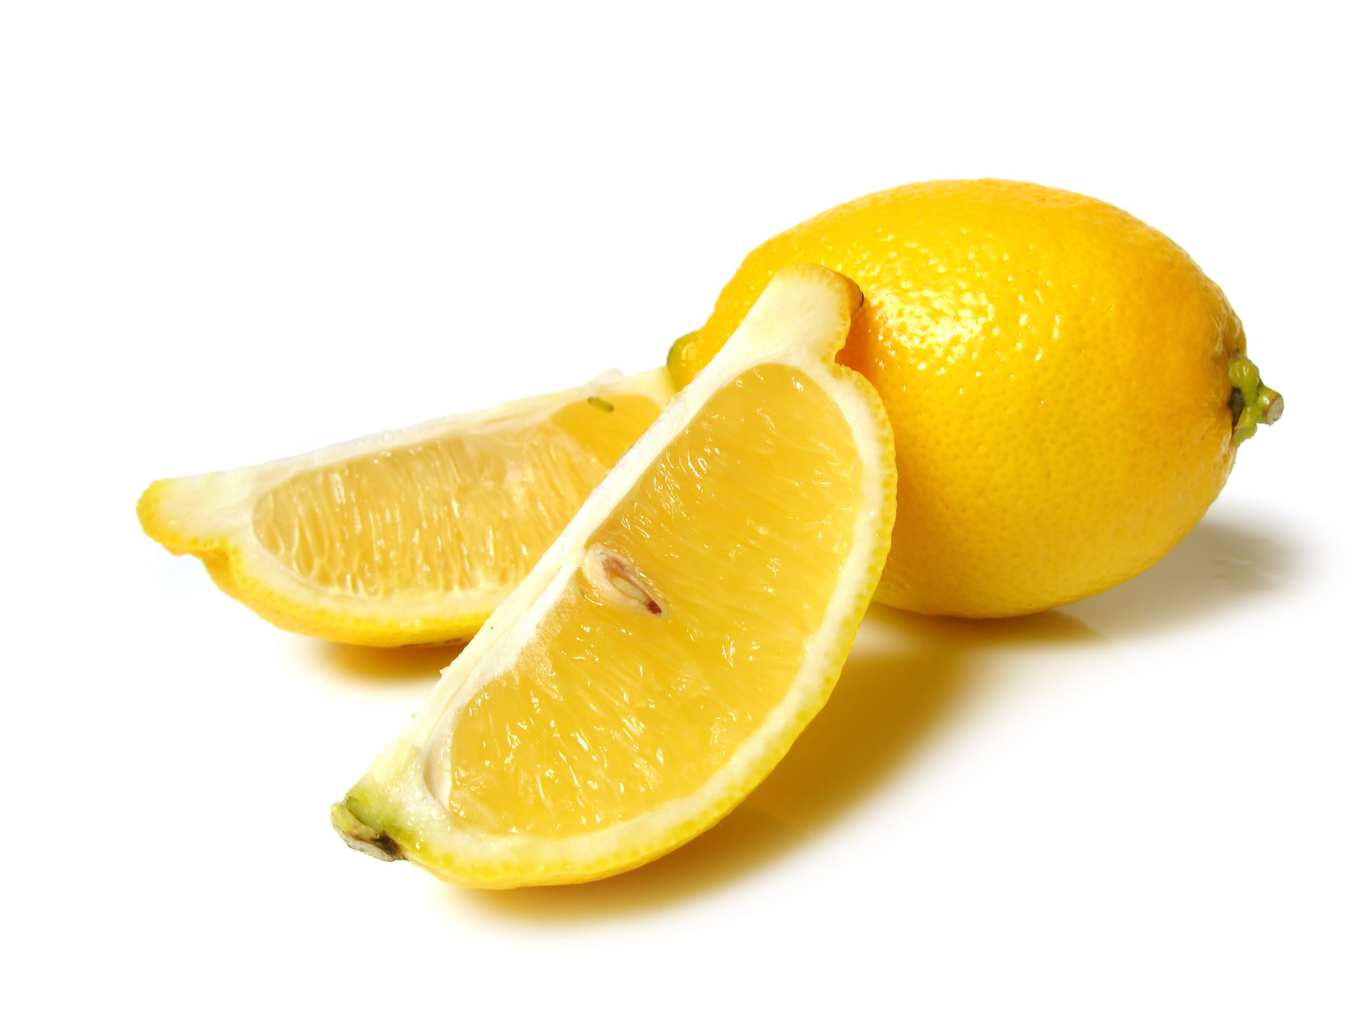 Lemons on a white surface